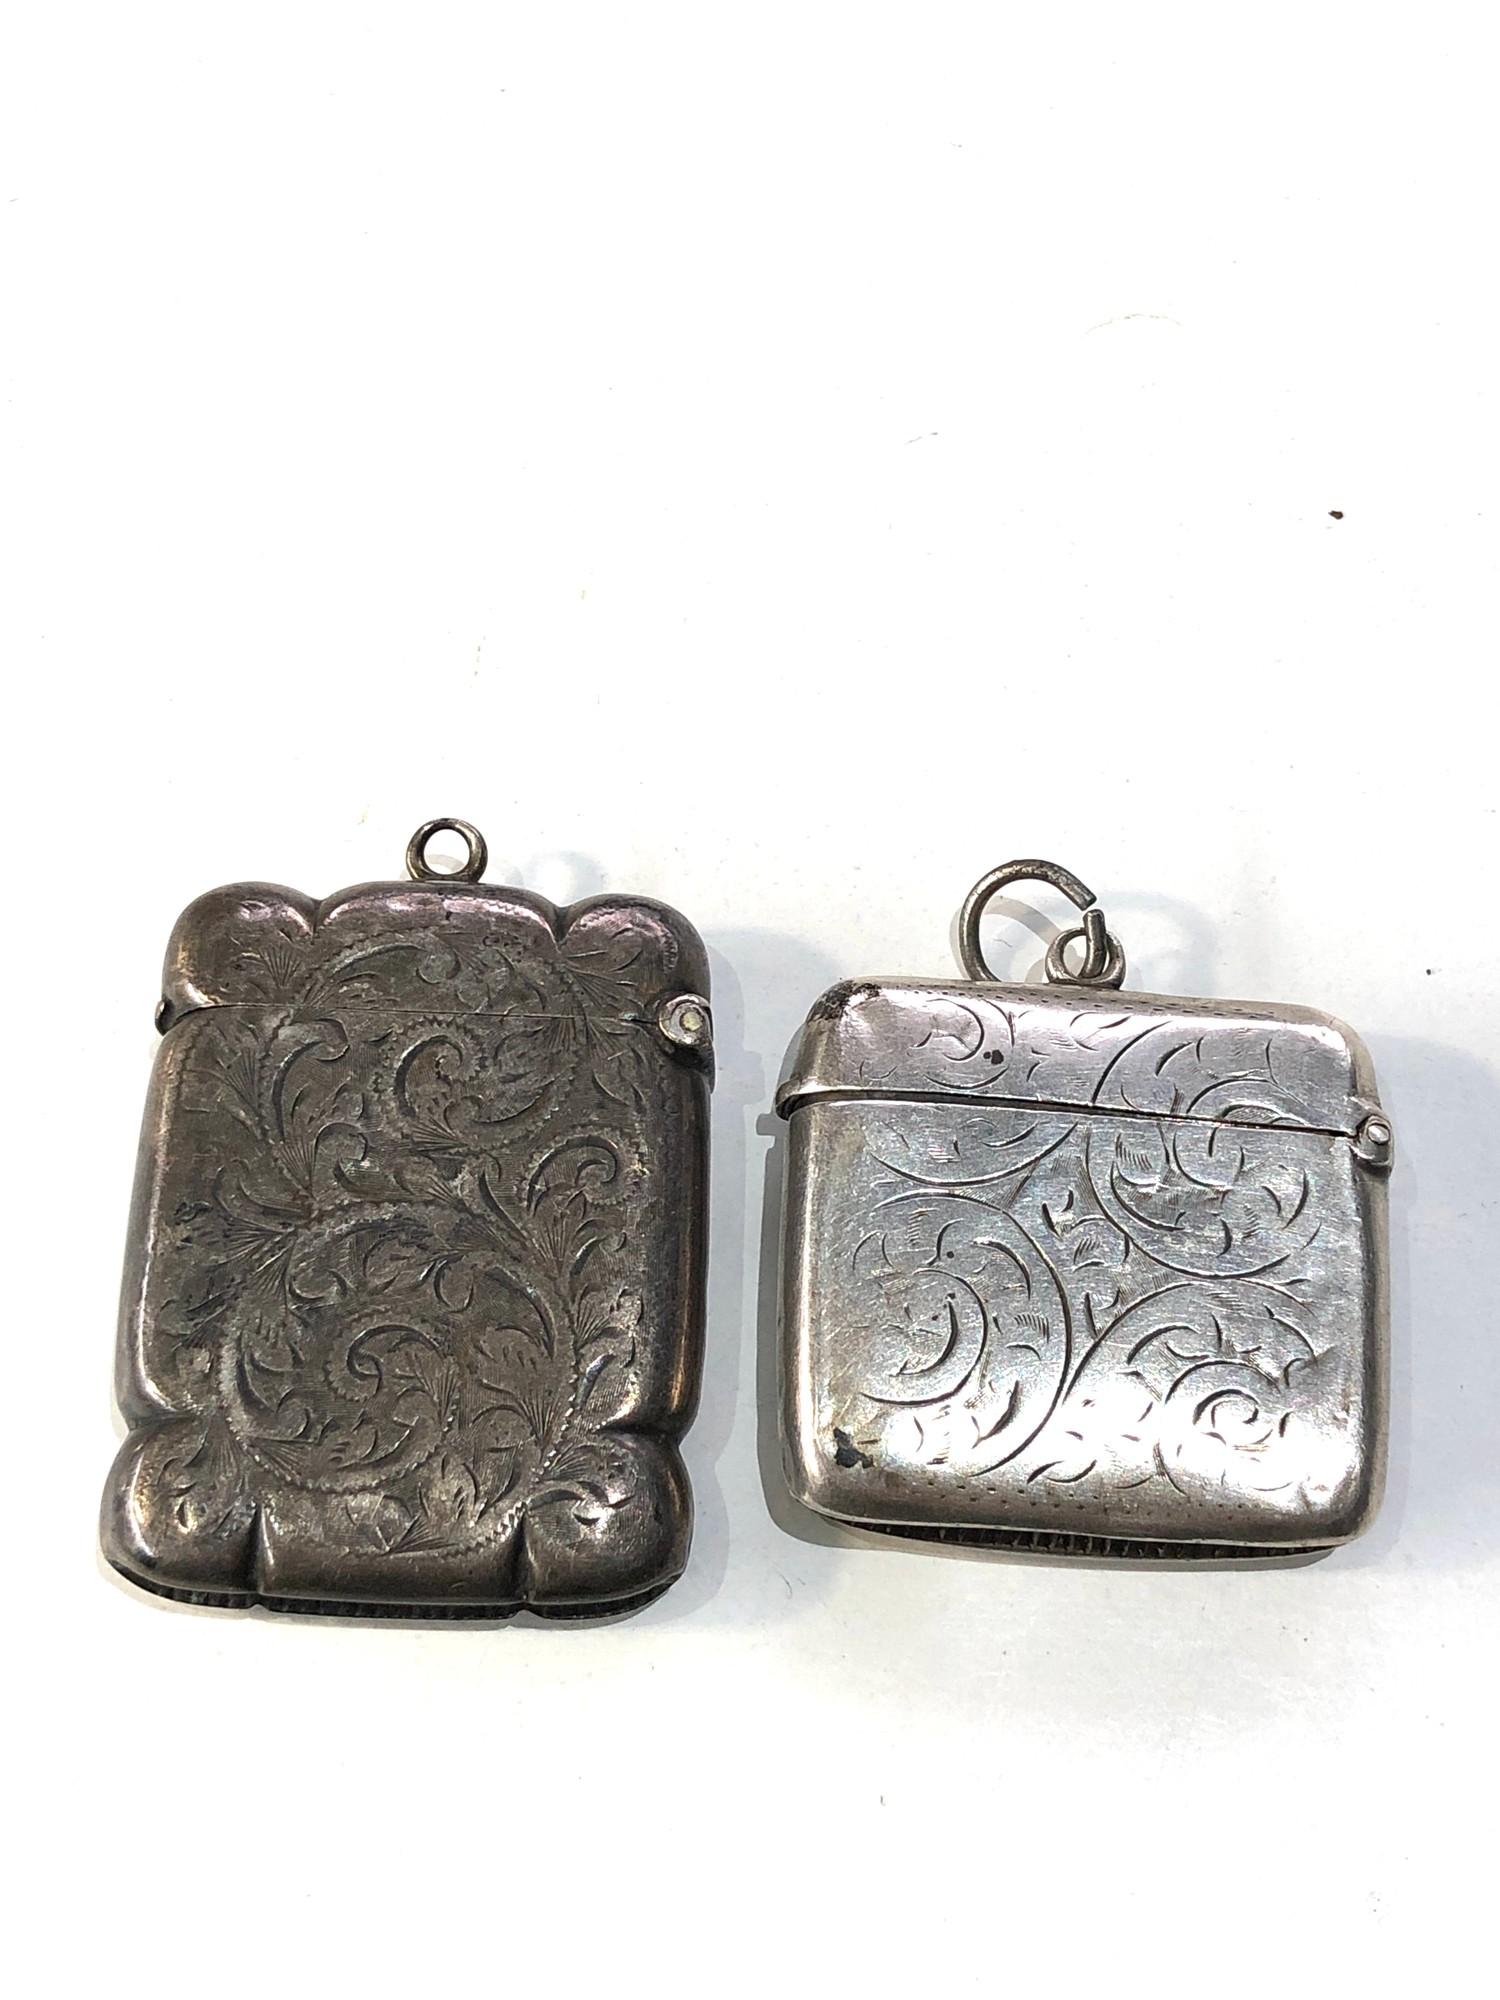 2 antique silver vesta / match strikers - Image 3 of 3